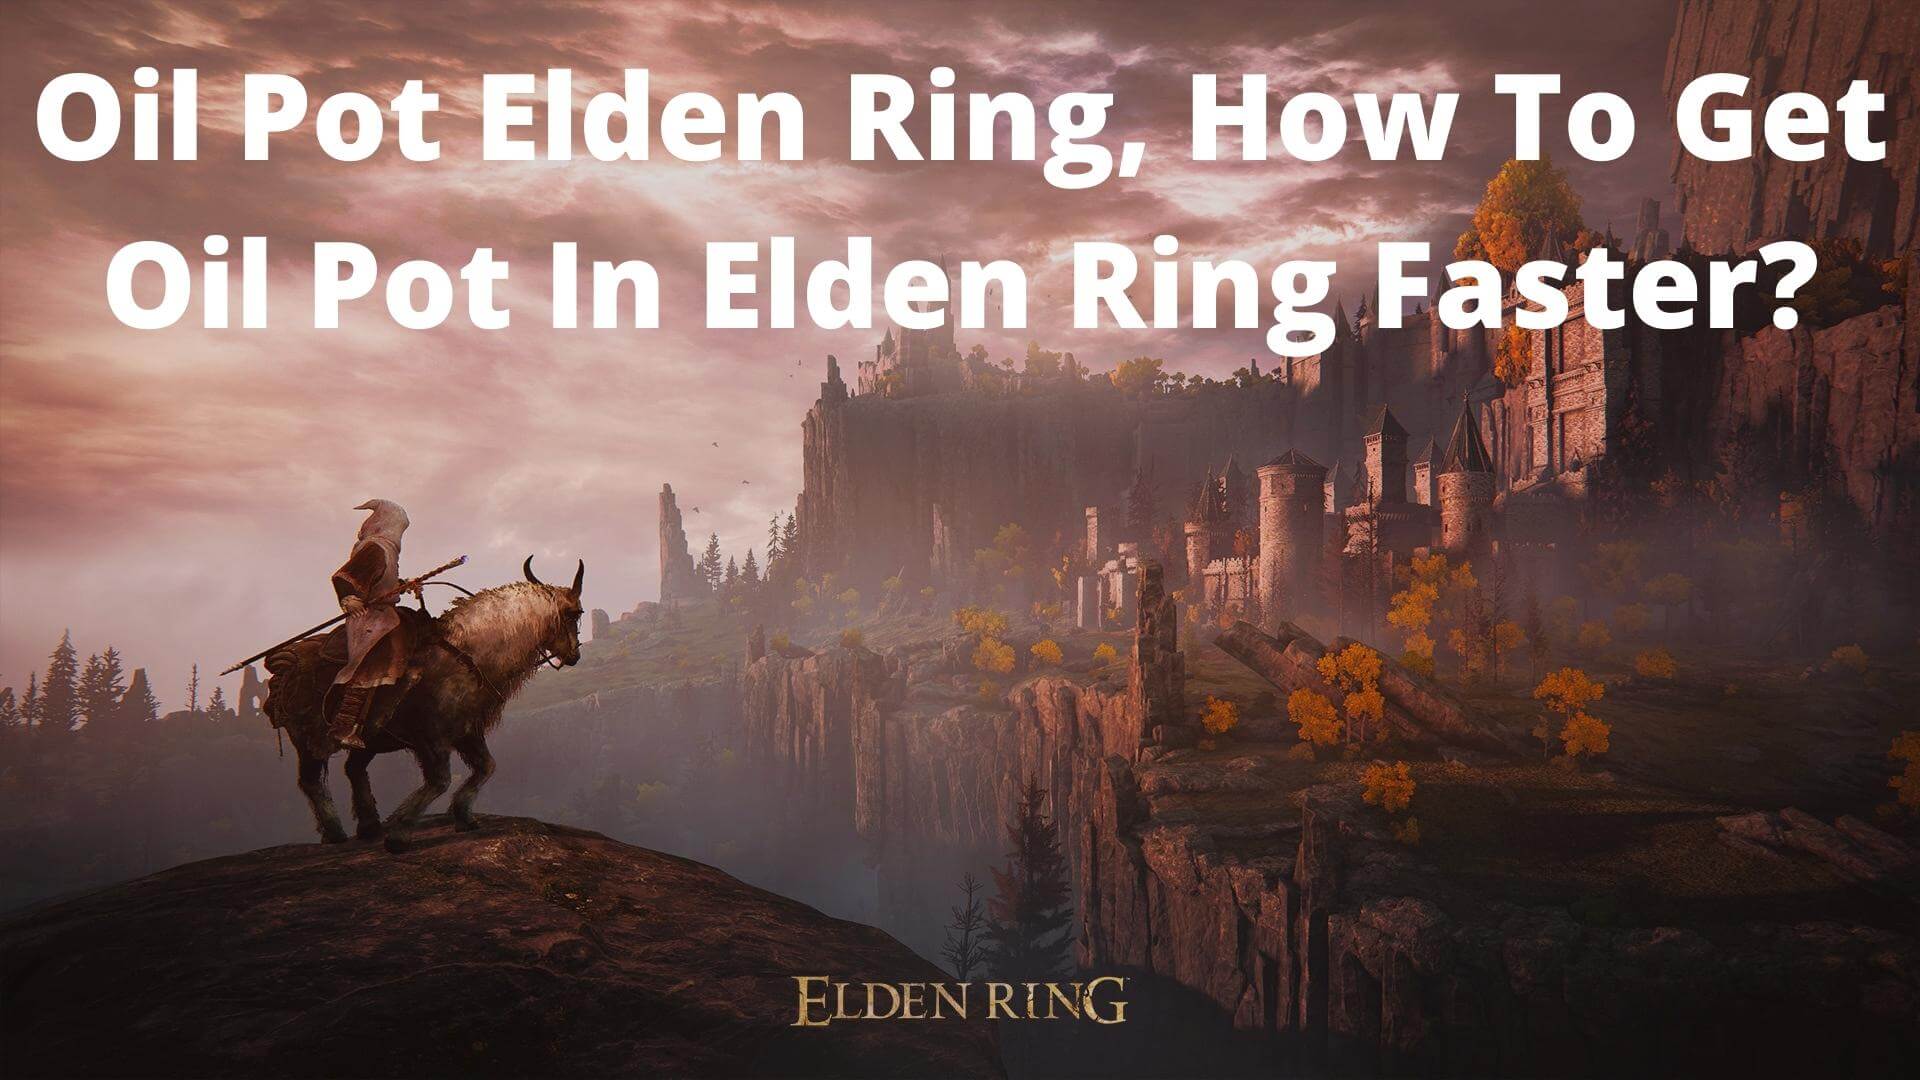 Oil Pot Elden Ring, How To Get Oil Pot In Elden Ring Faster?